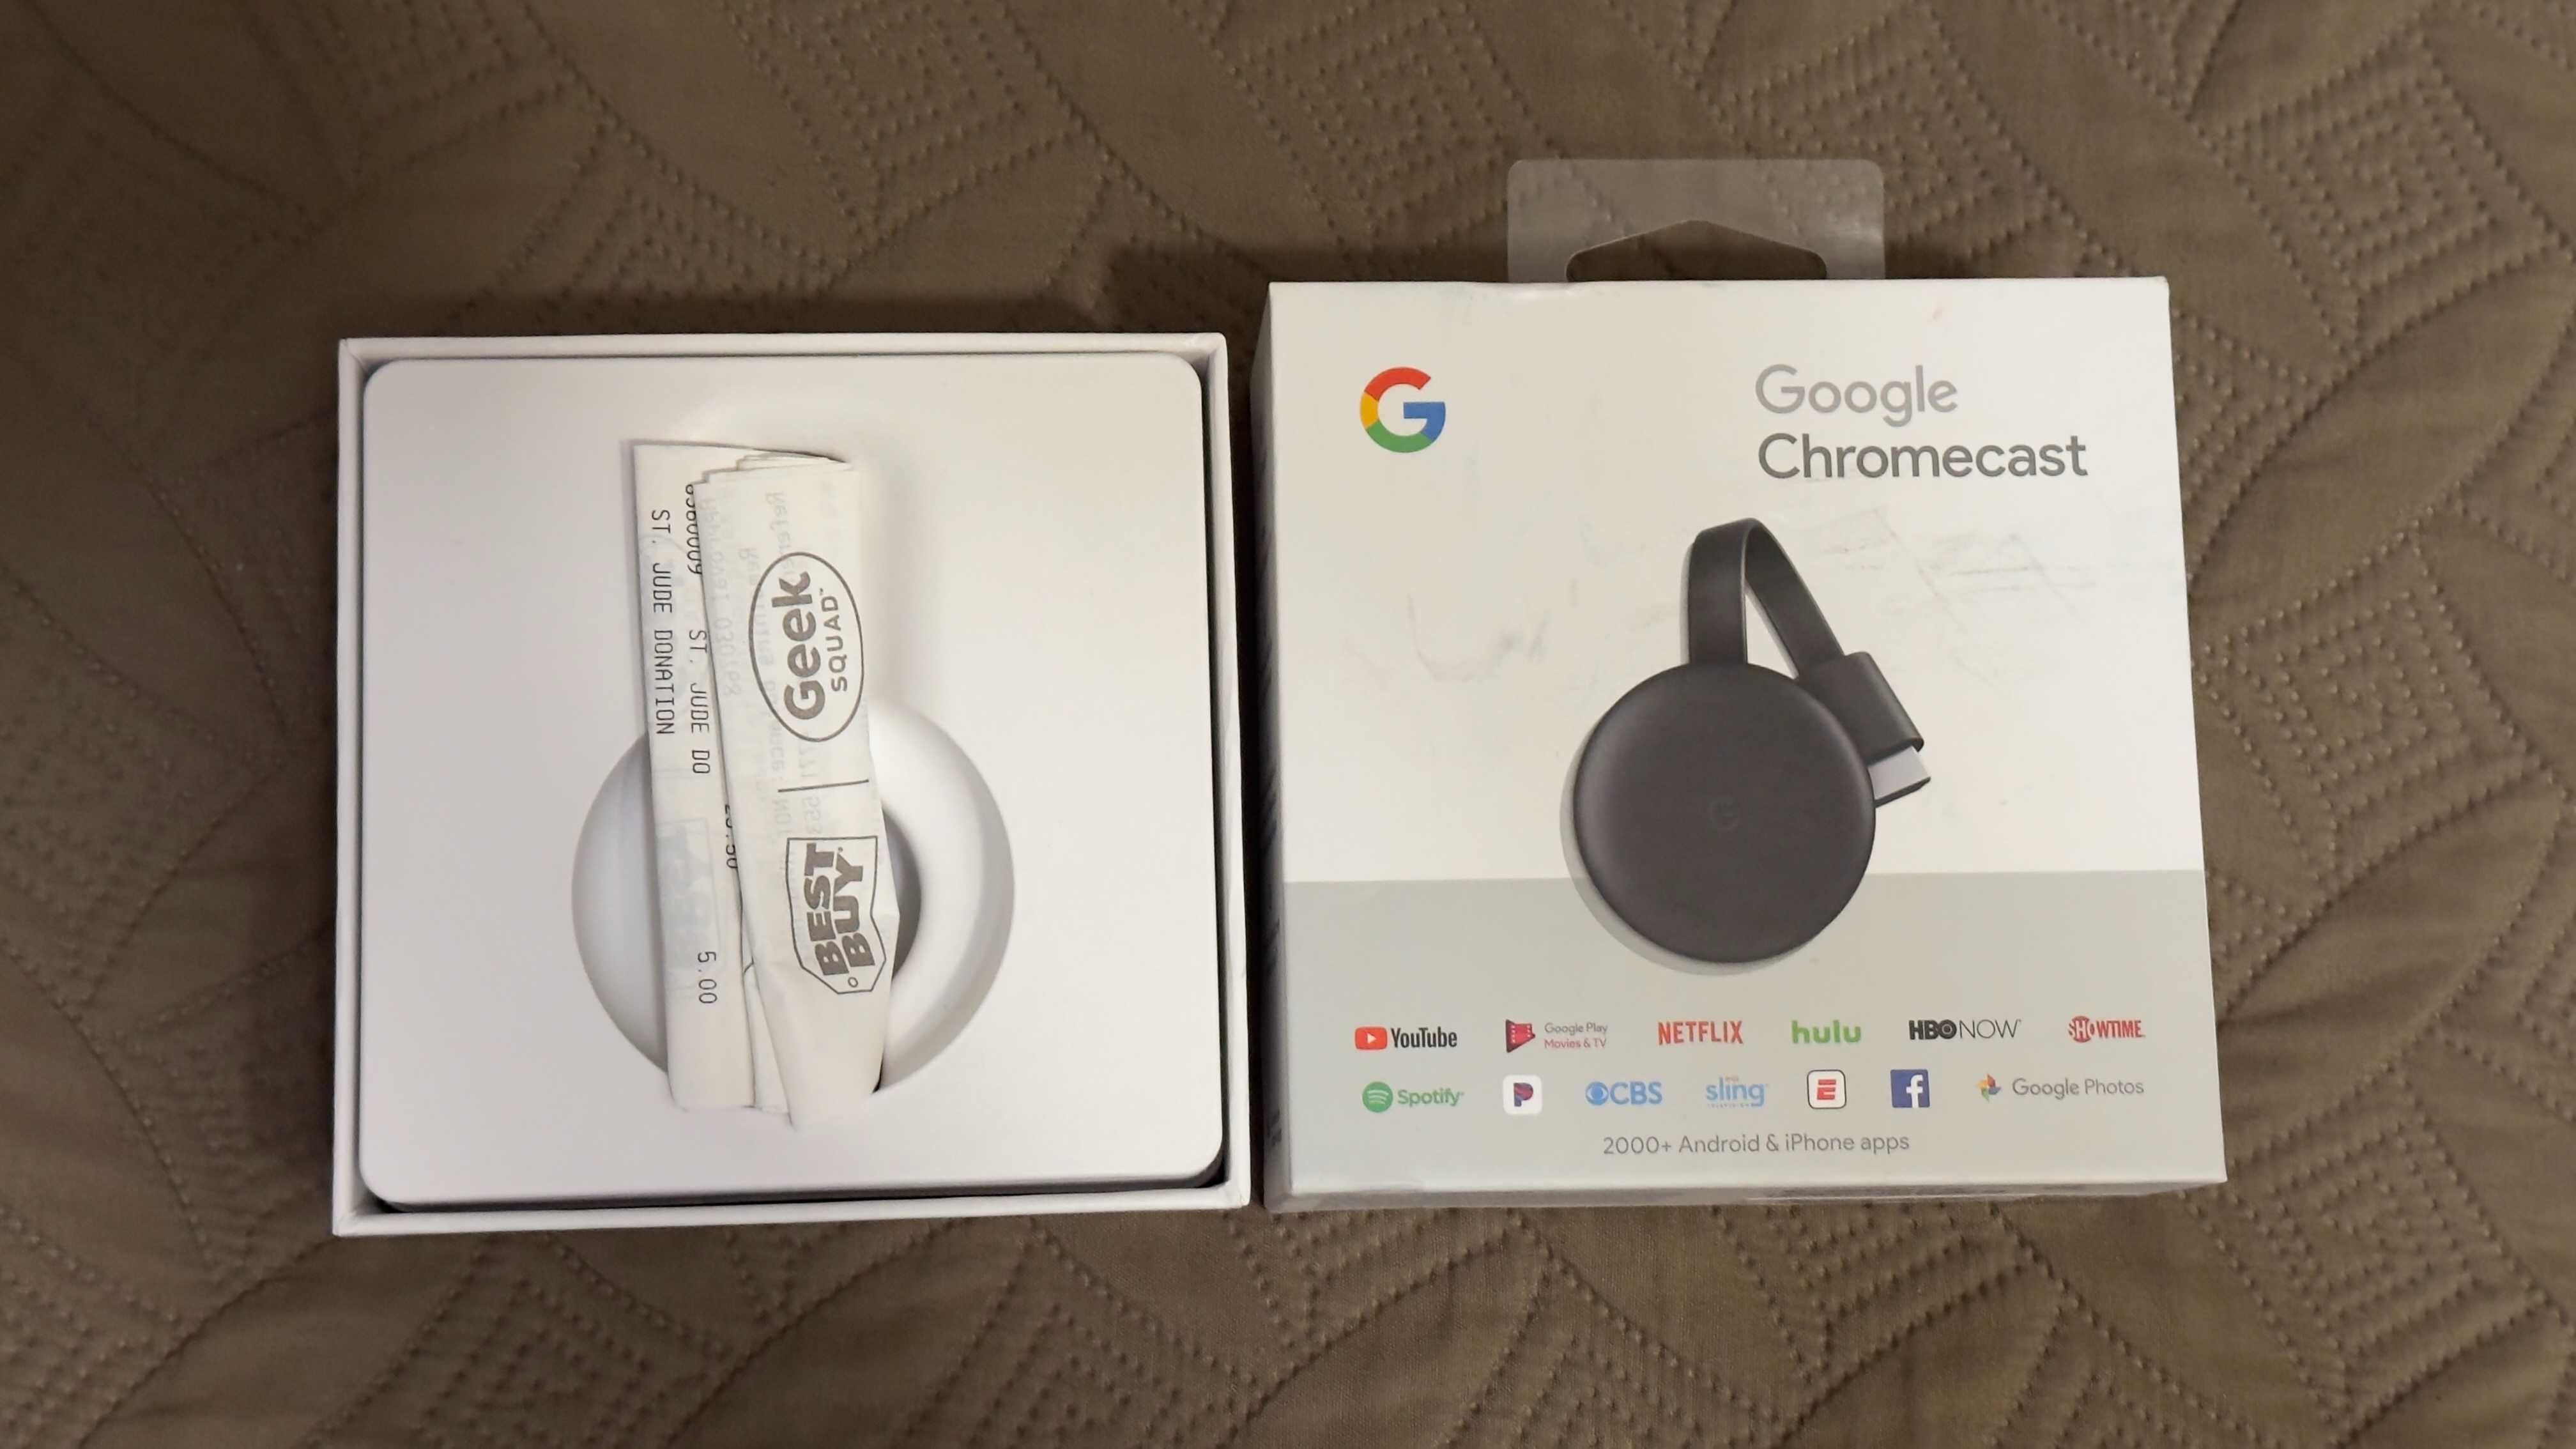 Google Chromecast 3